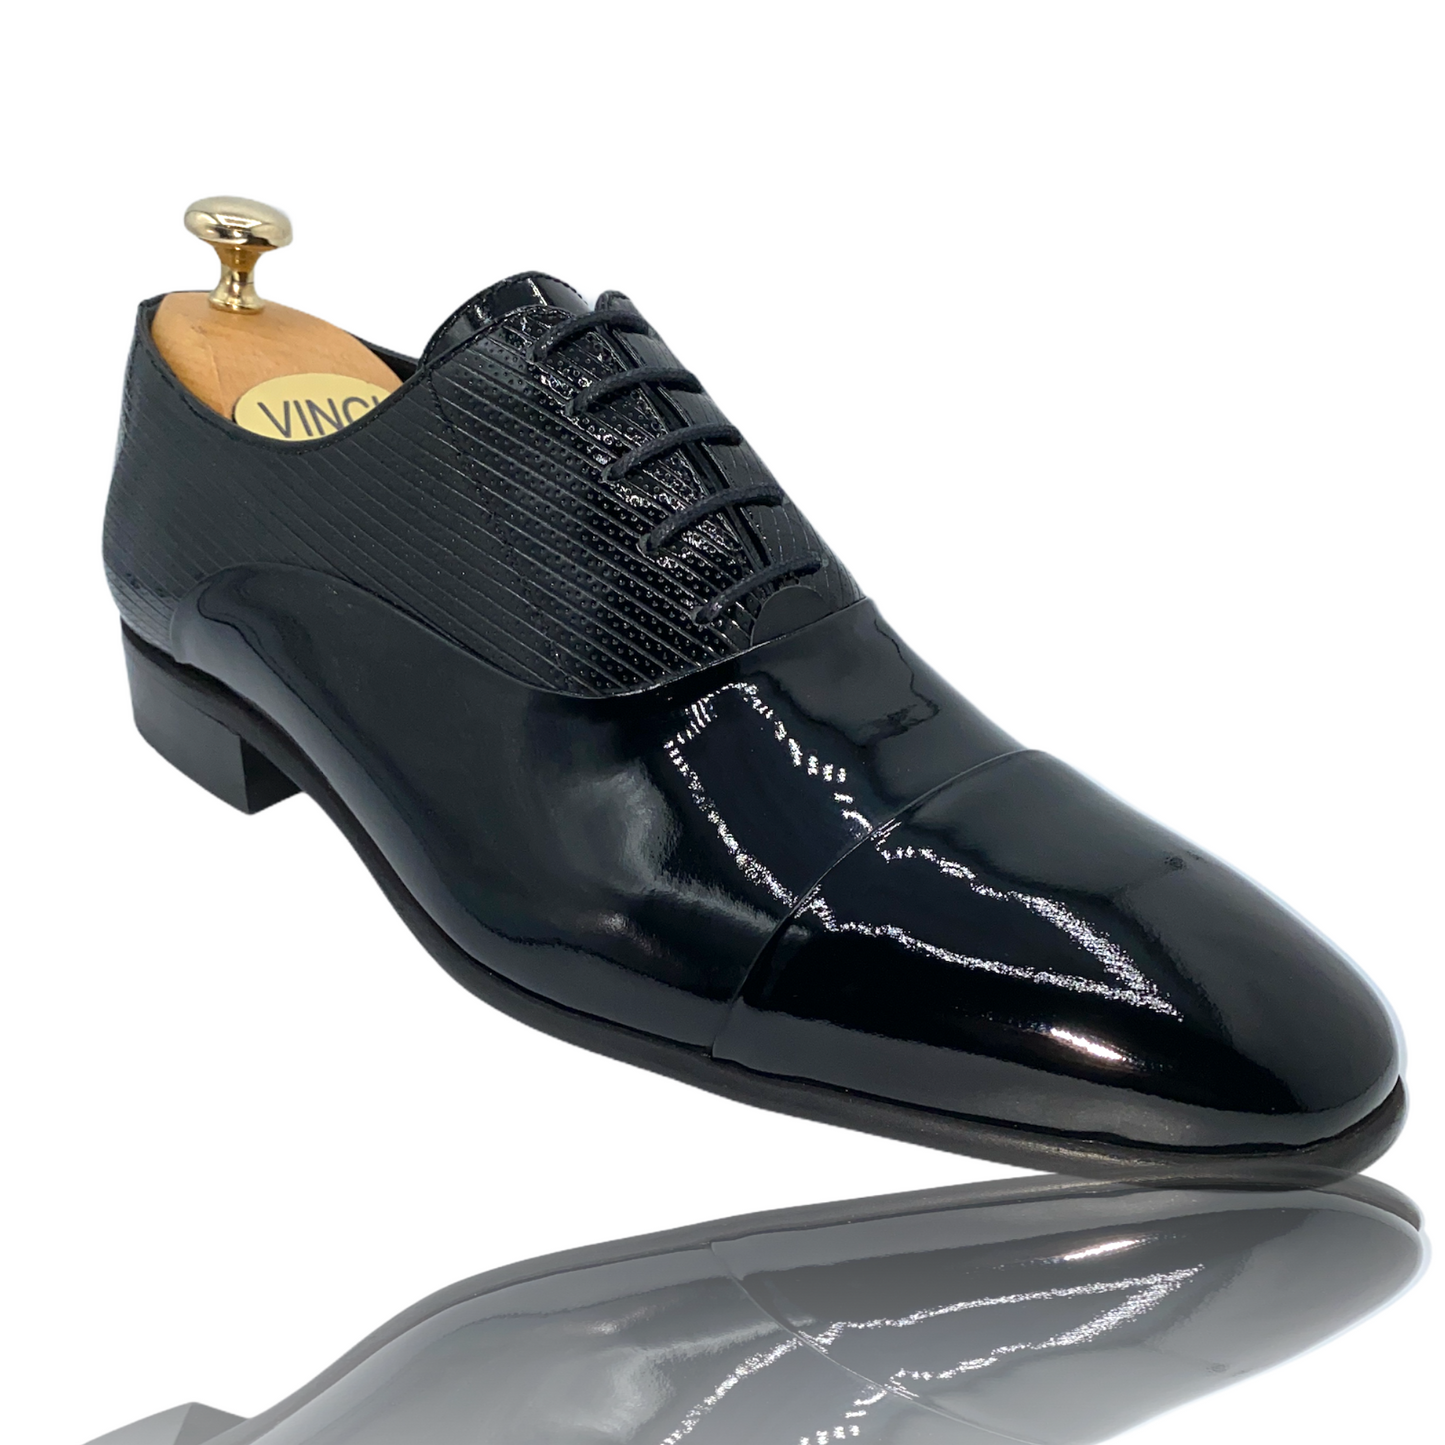 The Lima Black Patent Leather Cap Toe Oxford Shoe Final Sale!